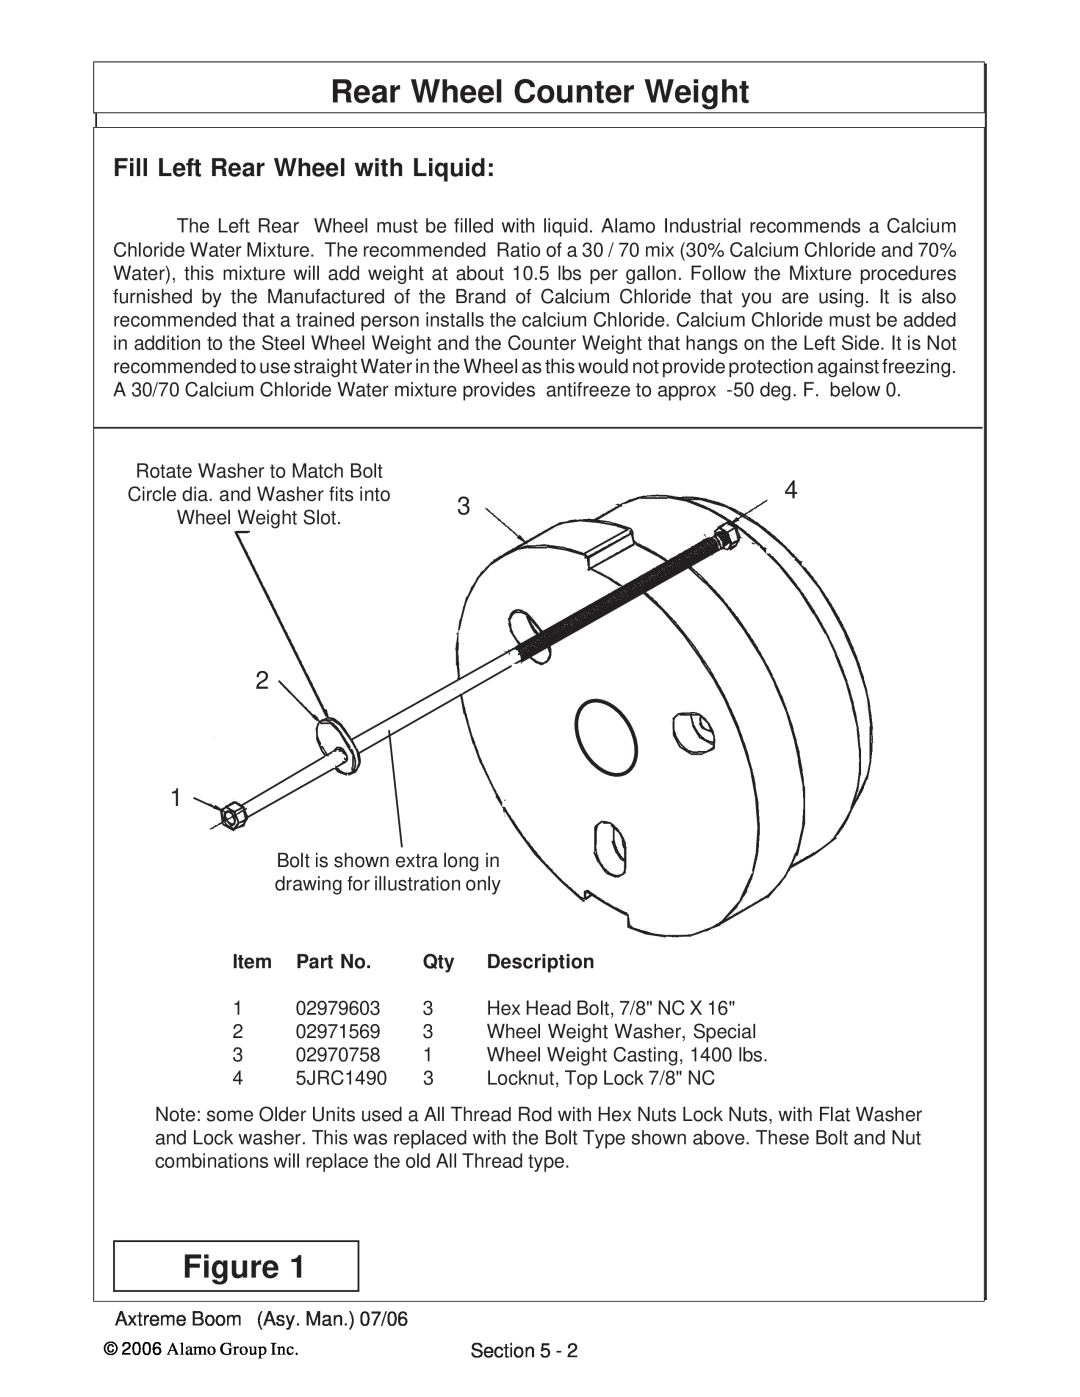 Alamo 02984405 instruction manual Rear Wheel Counter Weight, Fill Left Rear Wheel with Liquid, Description 